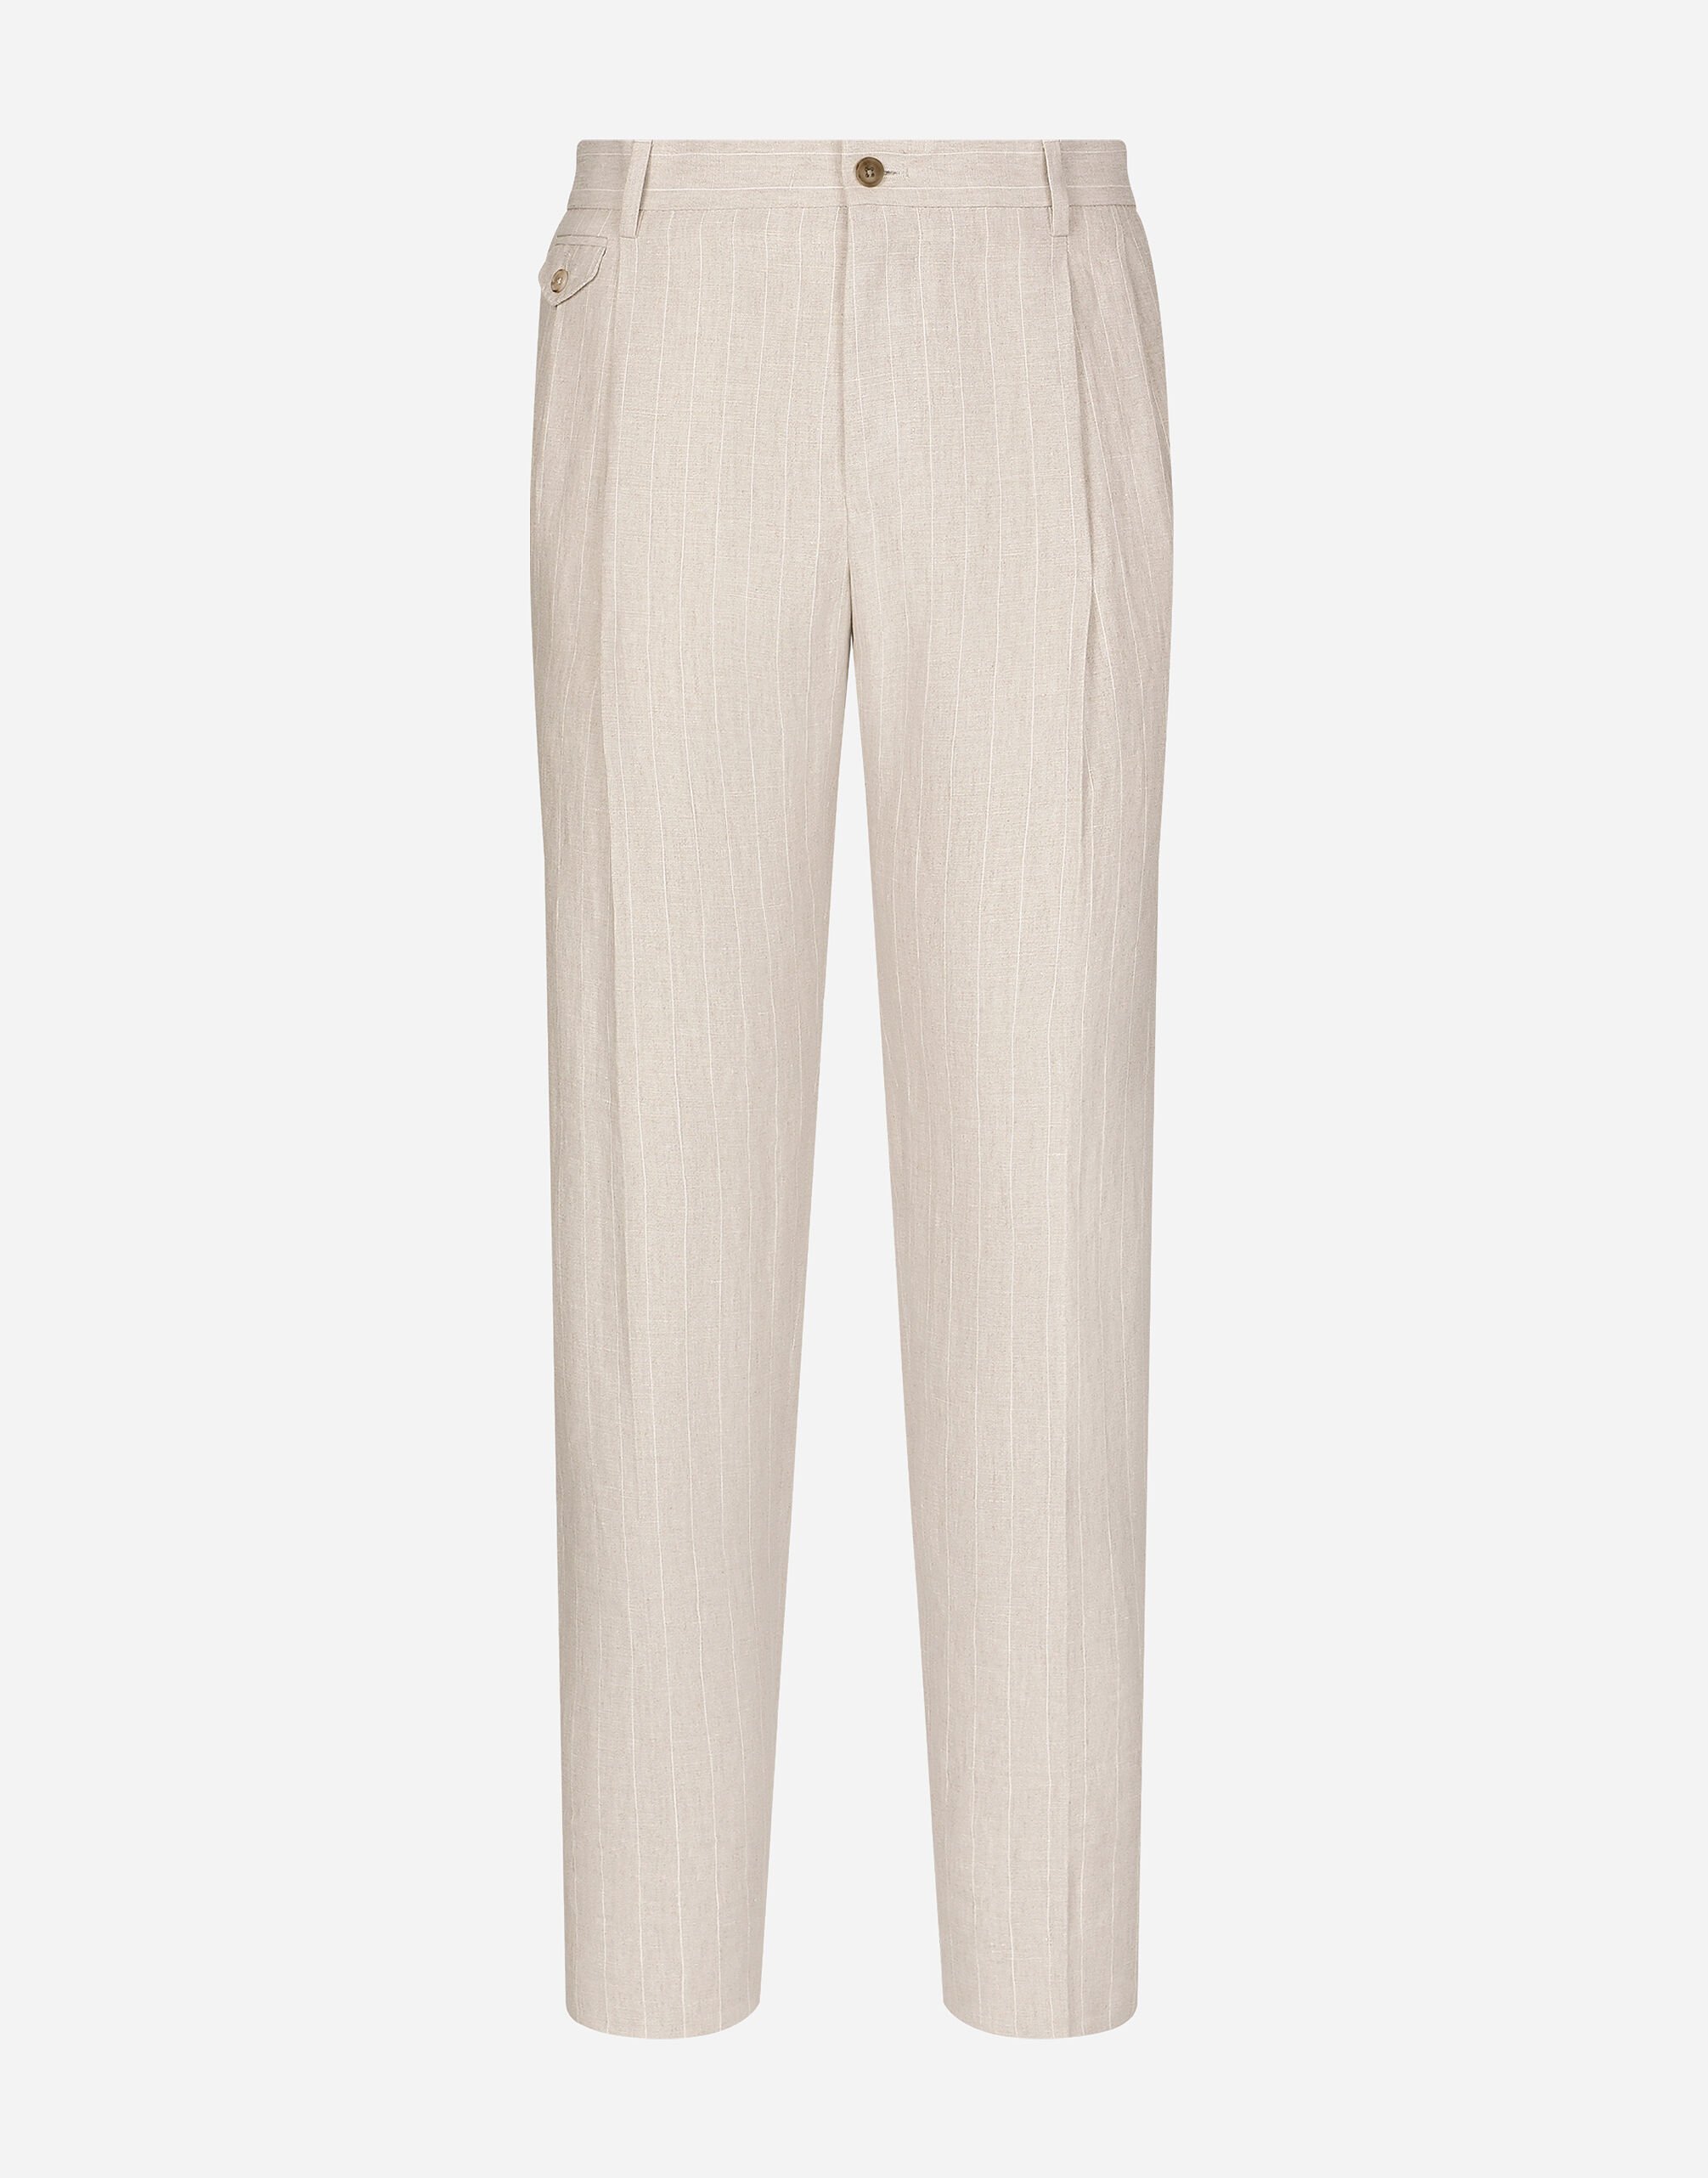 Dolce & Gabbana سروال كتان مقلّم متعدد الألوان GY6UETFR4BP